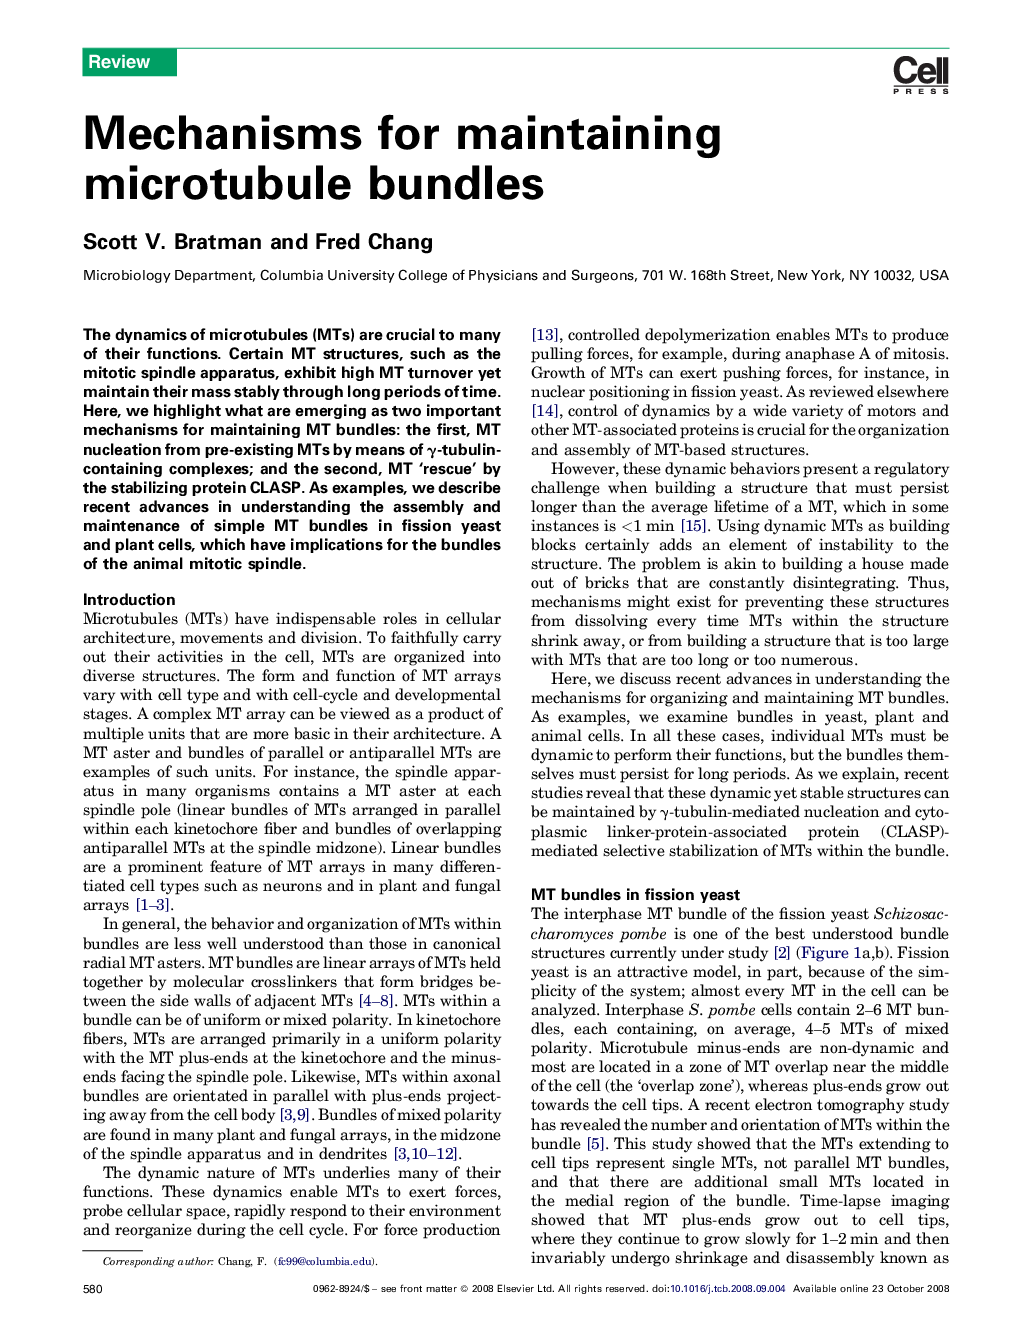 Mechanisms for maintaining microtubule bundles